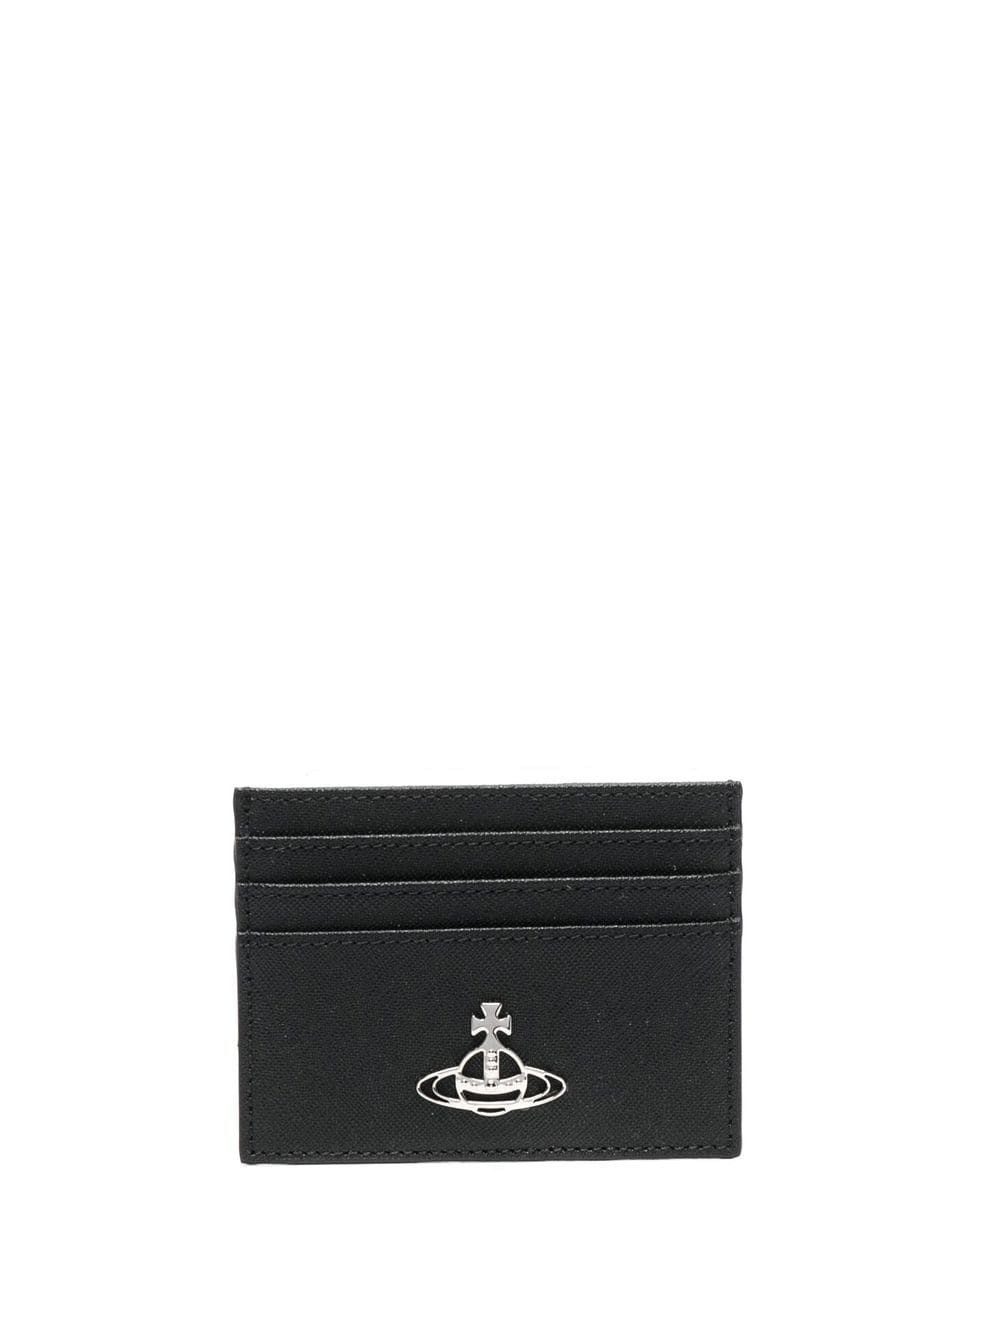 VIVIENNE WESTWOOD - Logo Leather Credit Card Case Vivienne Westwood